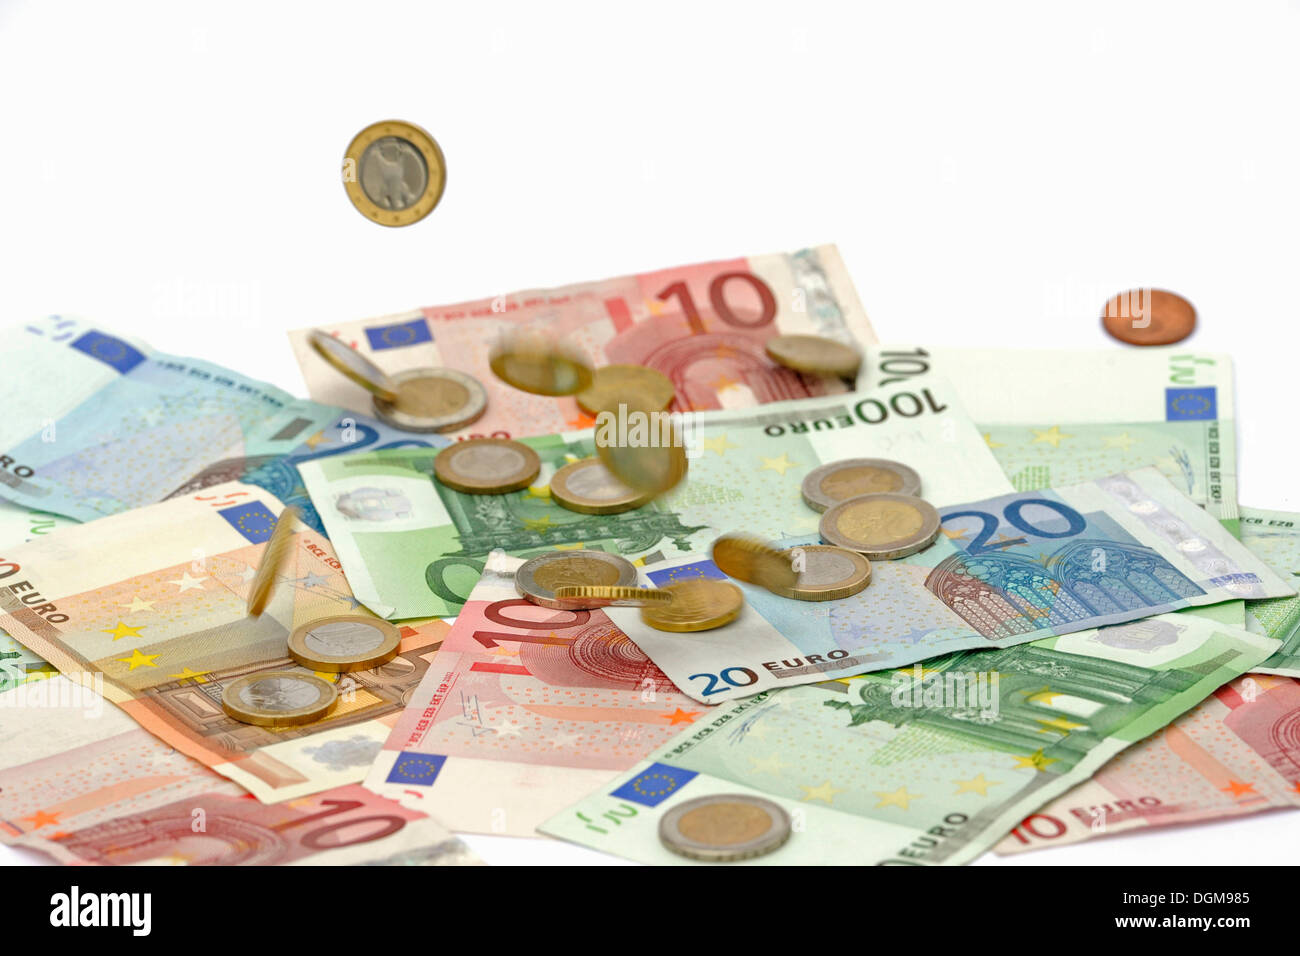 Euro coins falling on euro banknotes, raining money Stock Photo